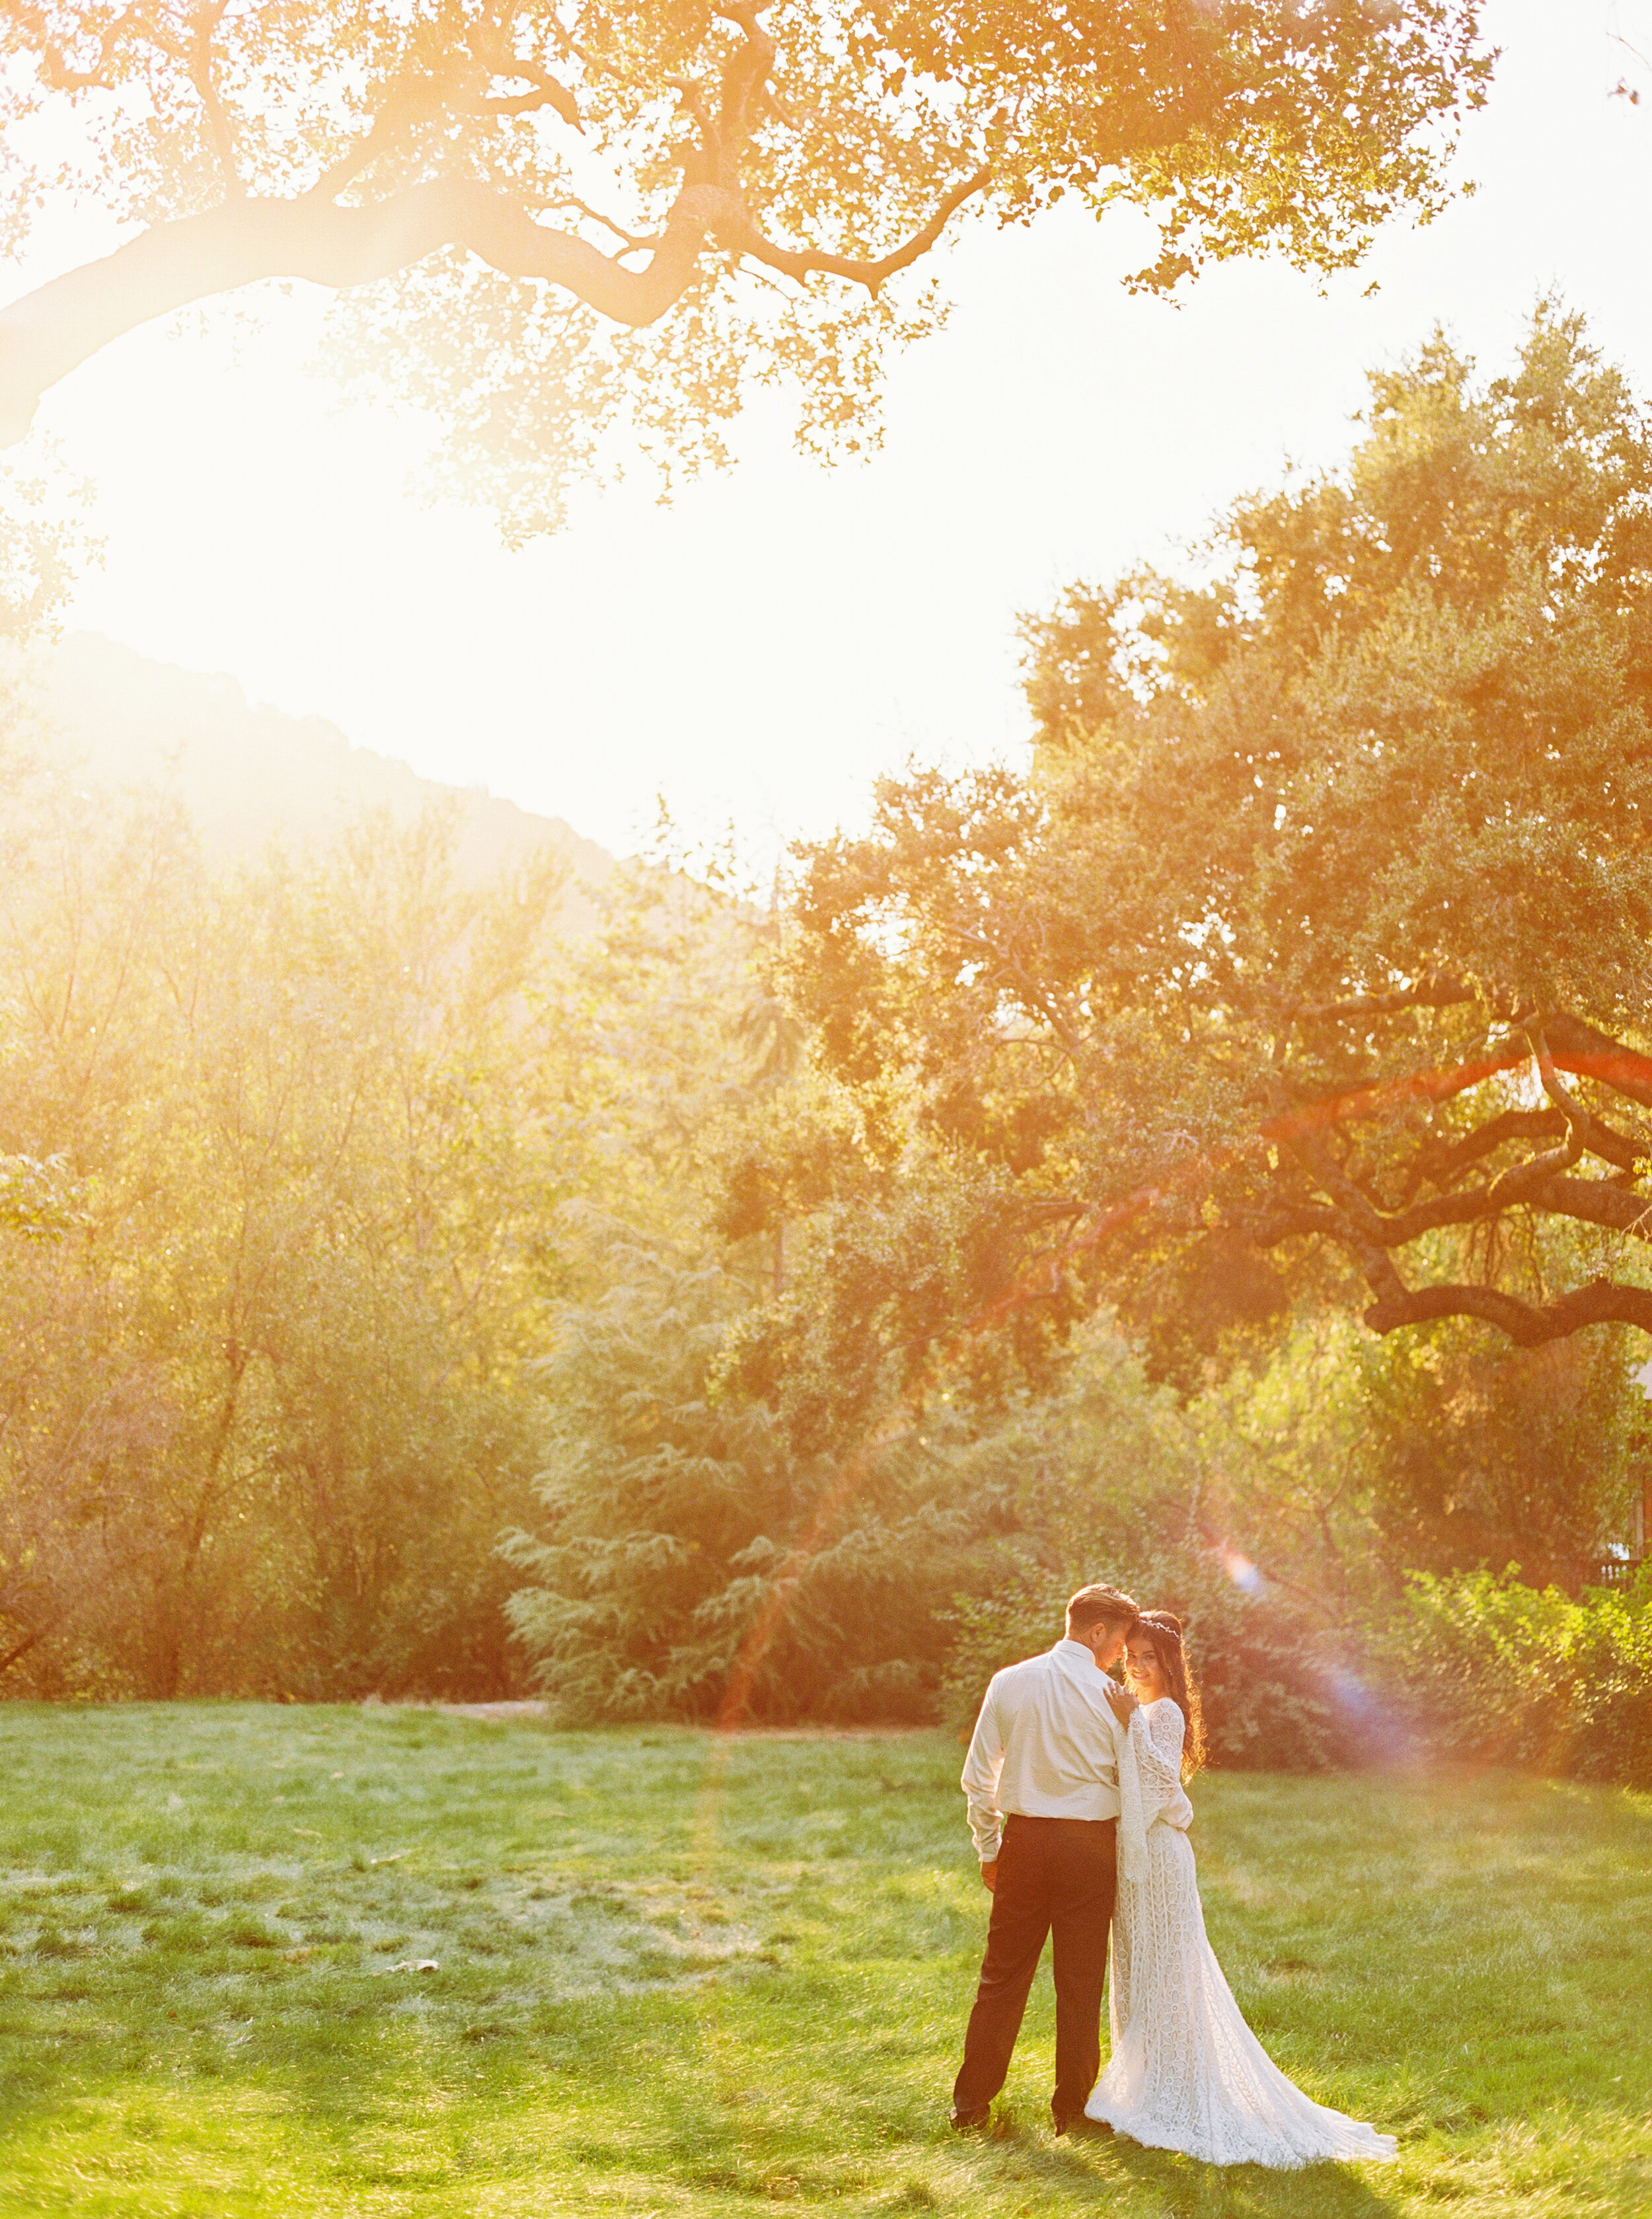 Sarahi Hadden - An Earthy Summer Boho Inspired Wedding with Sunset Hues at Gardener Ranch-34.jpg